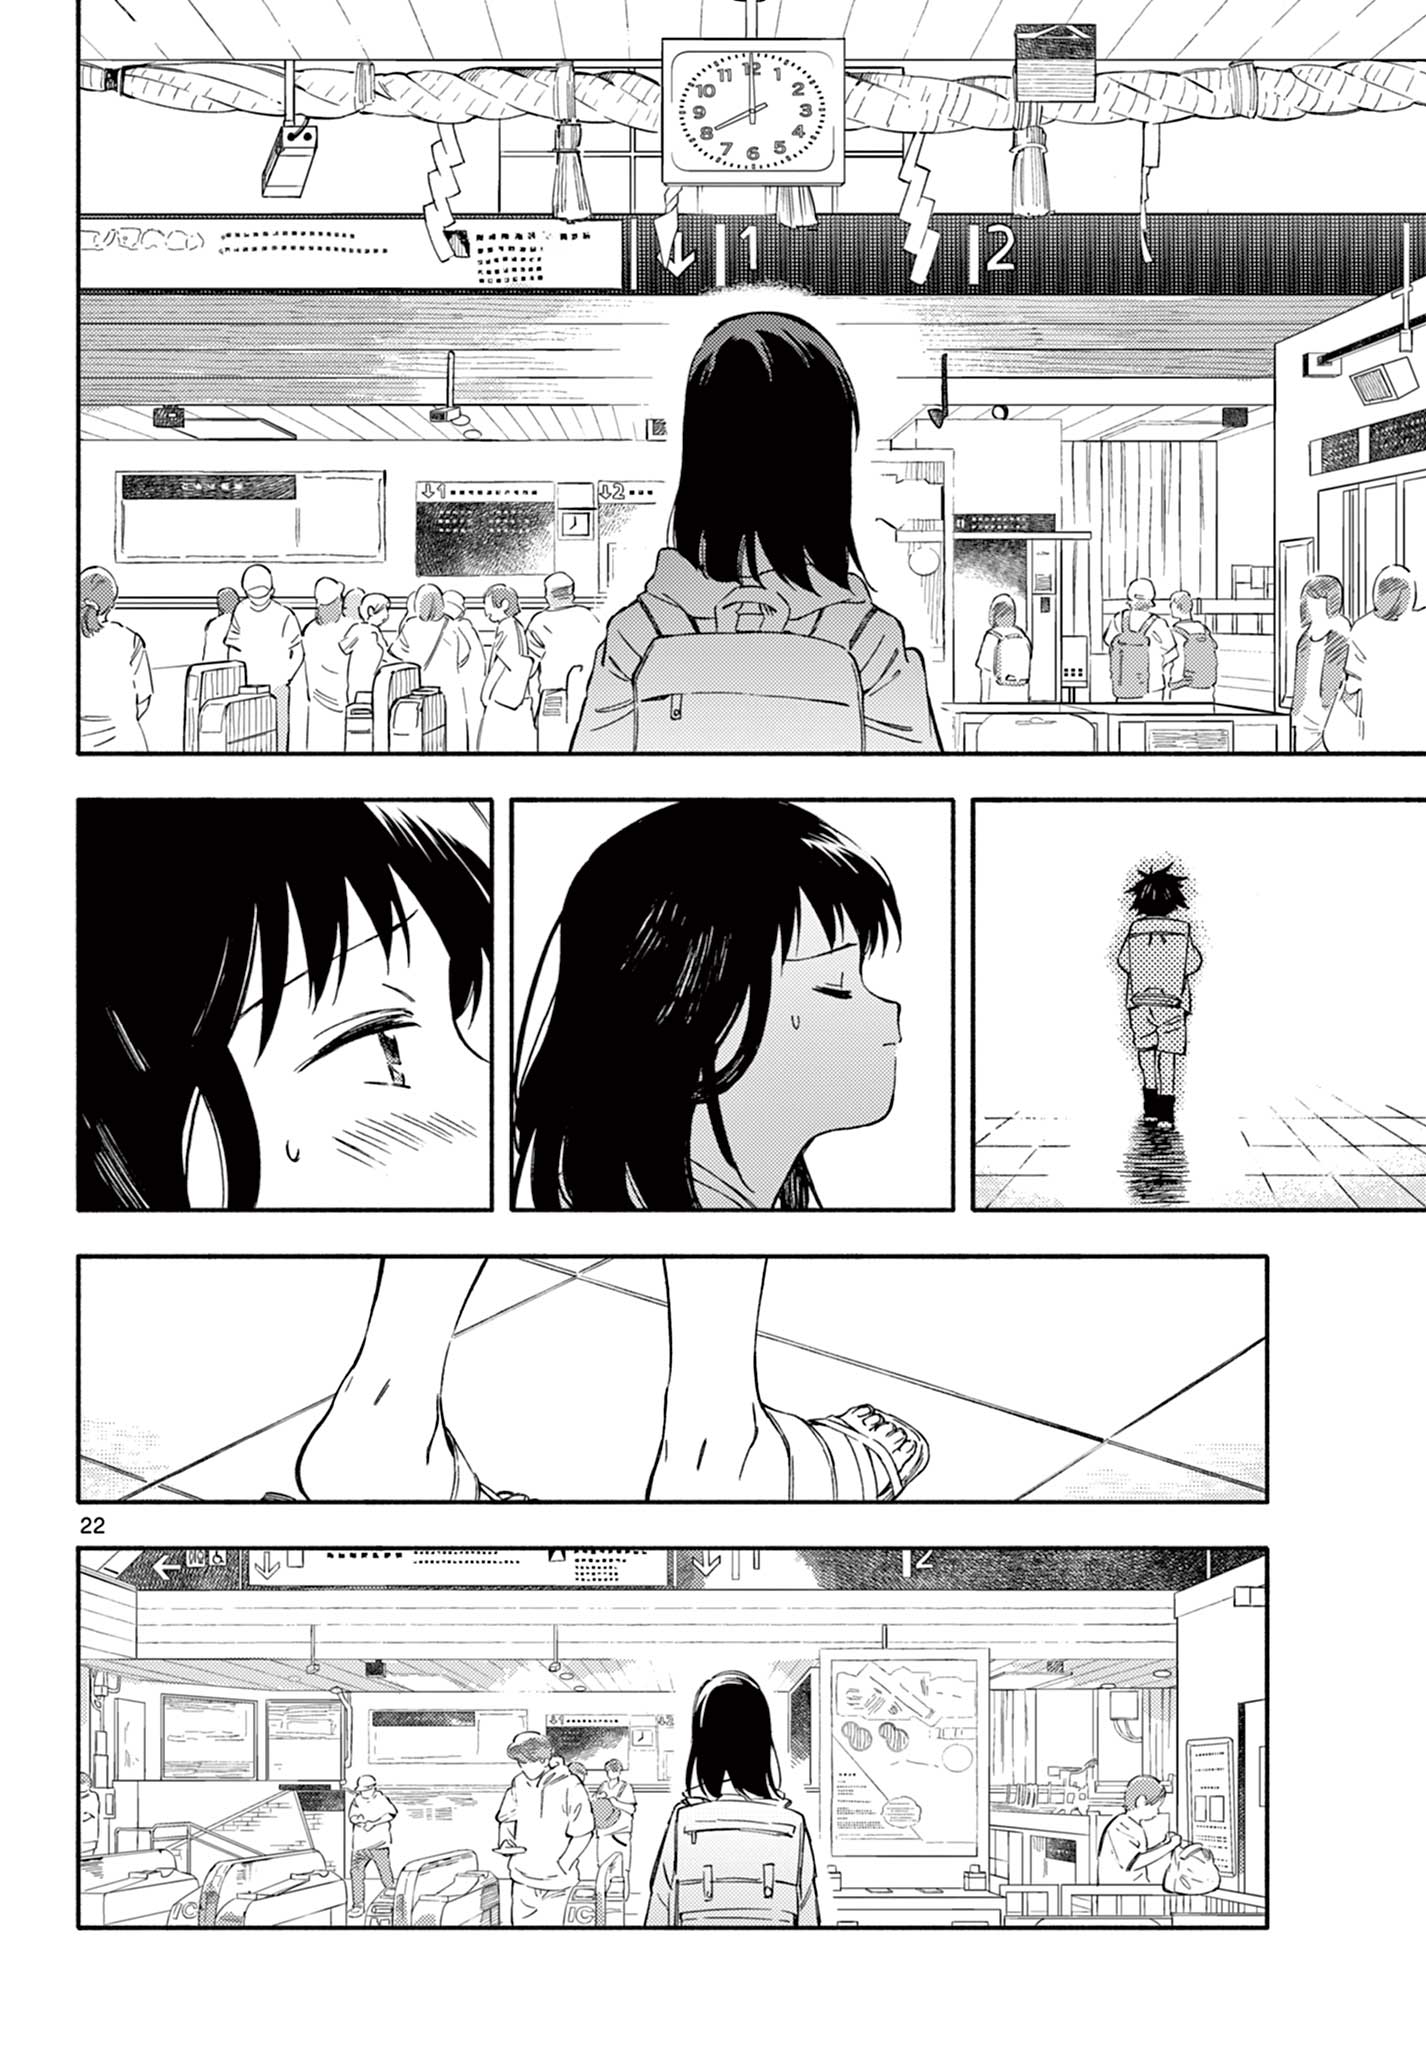 Nami no Shijima no Horizont - Chapter 13.1-2 - Page 10